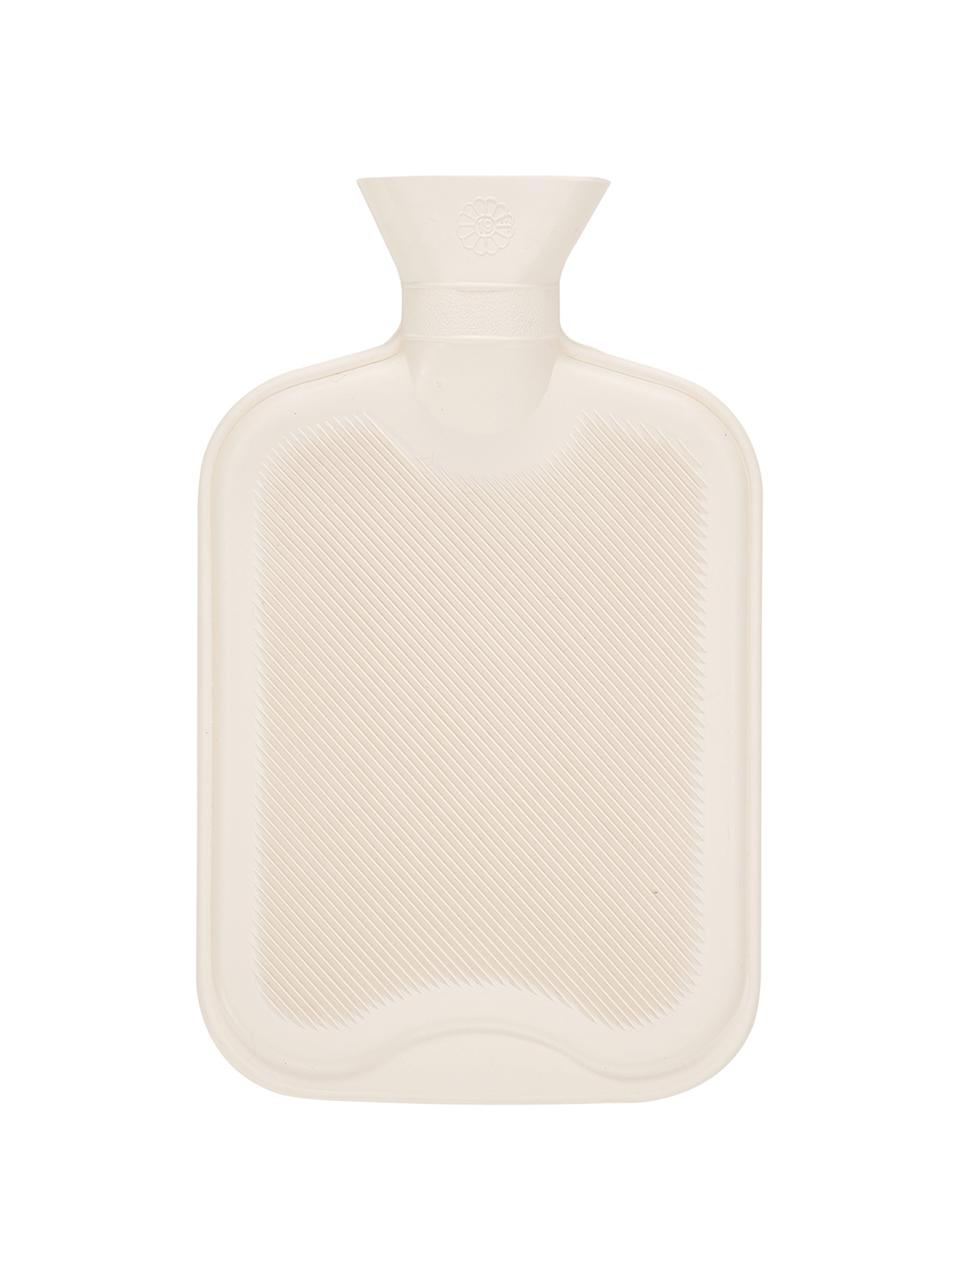 Bolsa de agua caliente de piel sintética Mette, Funda: 100% poliéster, Rosa, An 20 x L 32 cm